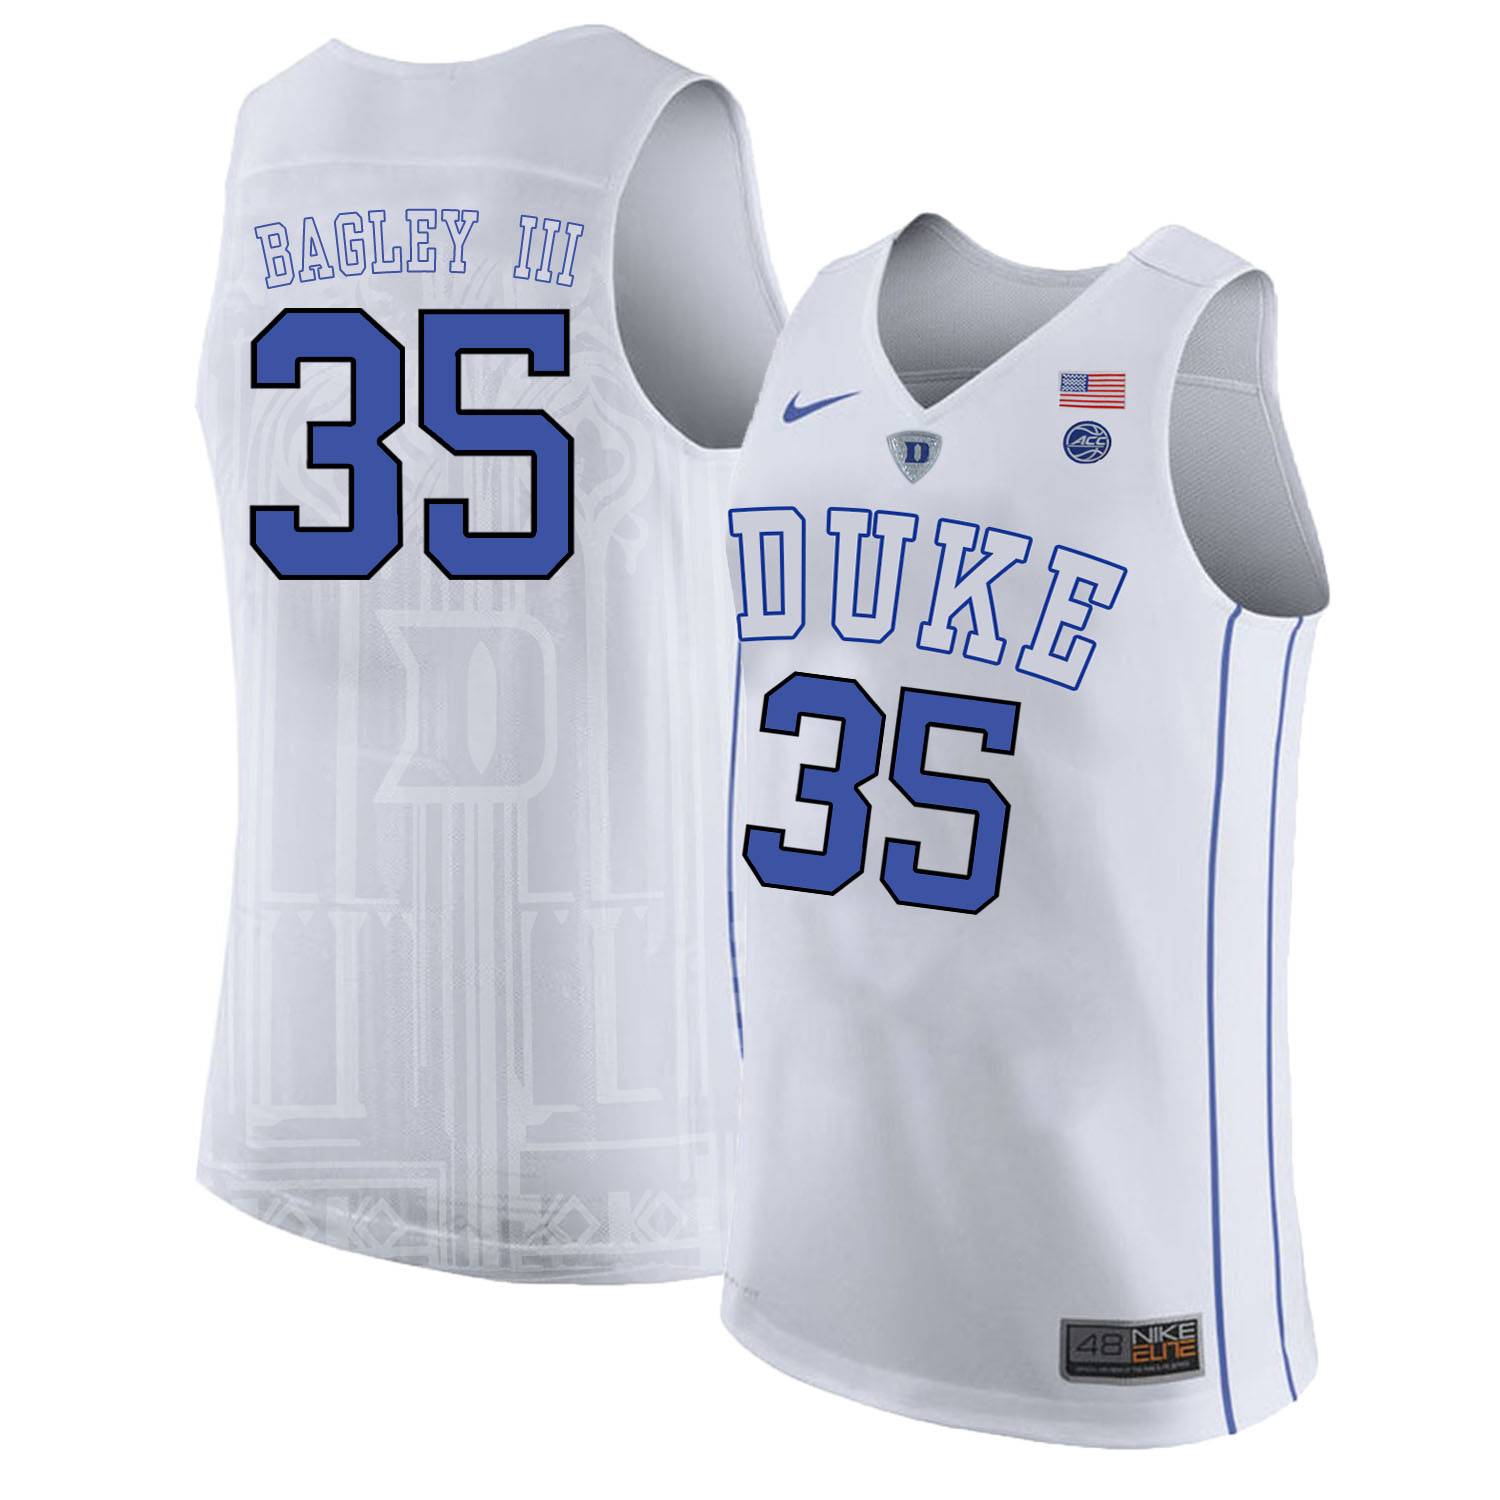 Duke Blue Devils 35 Marvin Bagley III White Nike College Basketball Jersey